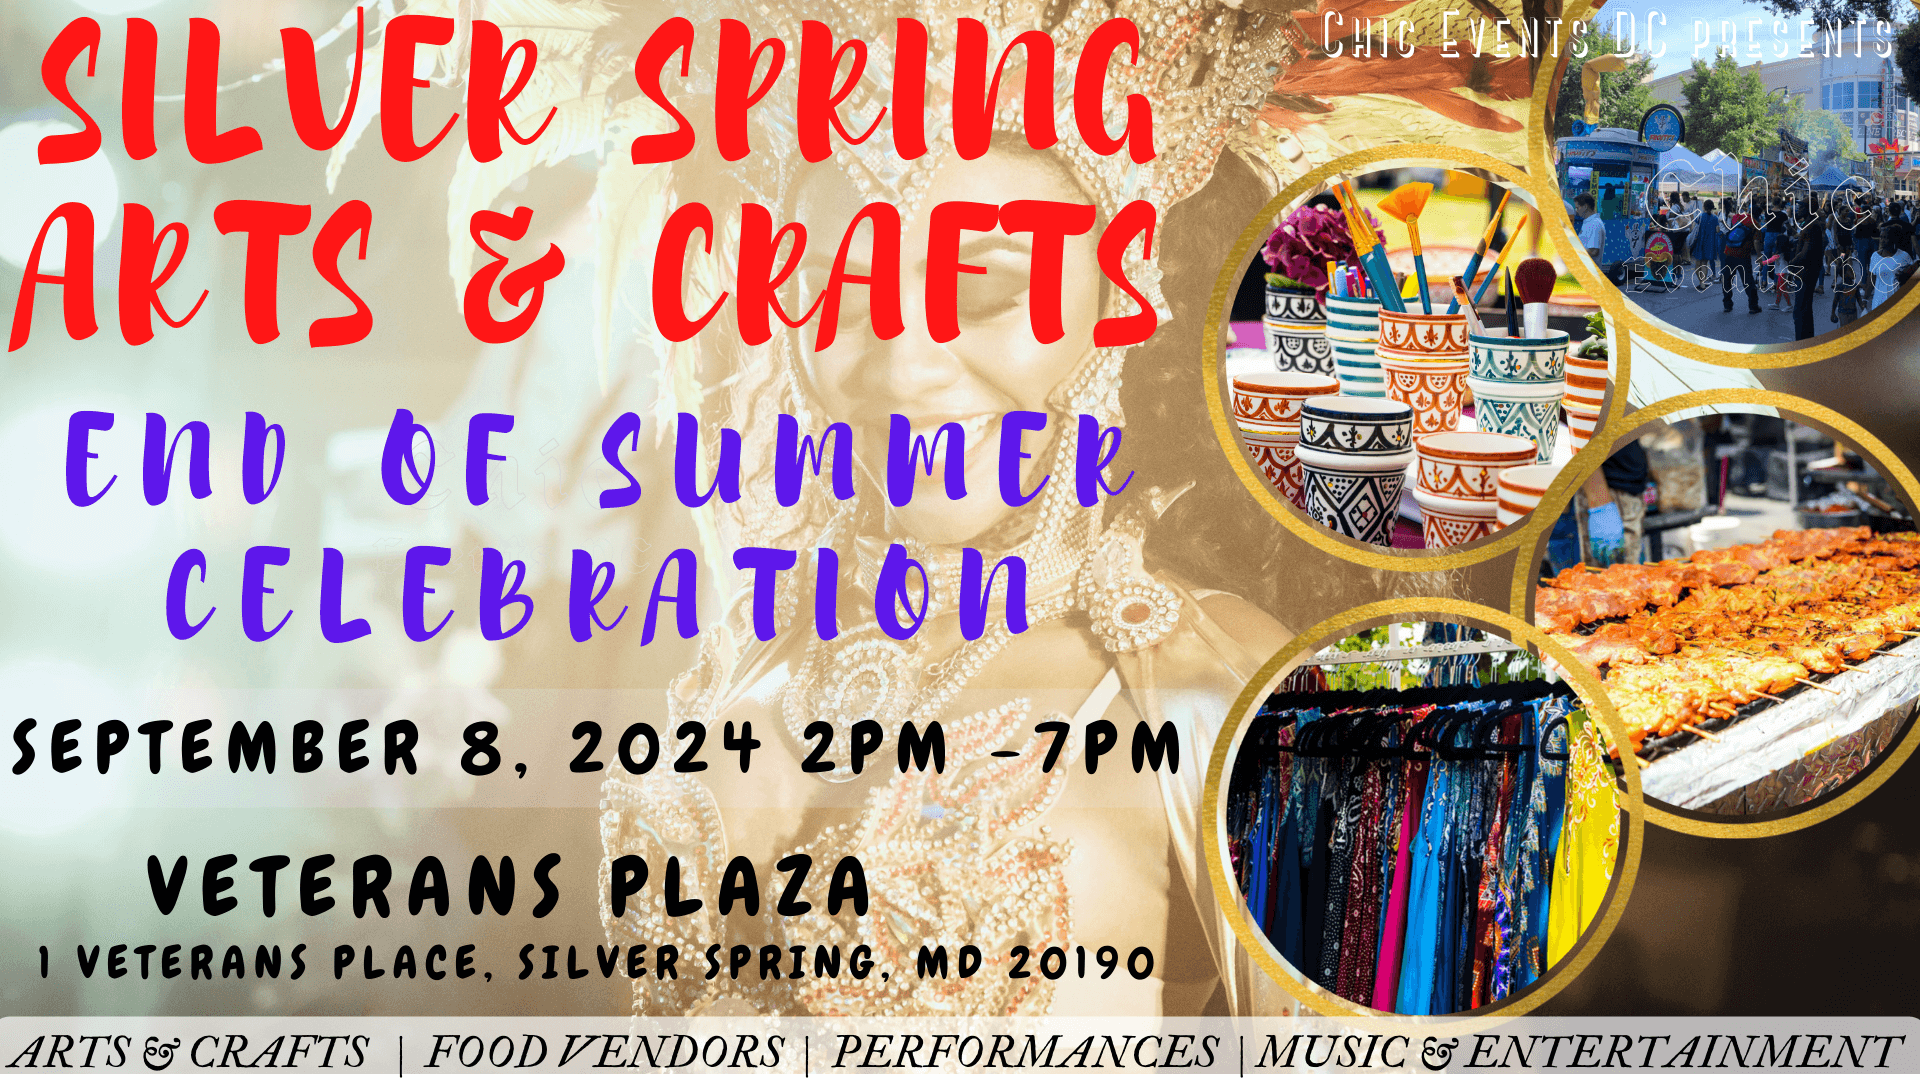 Silver Spring Arts & Crafts End Of Summer Celebration @ Veterans Plaza, Silver Spring, Maryland, United States